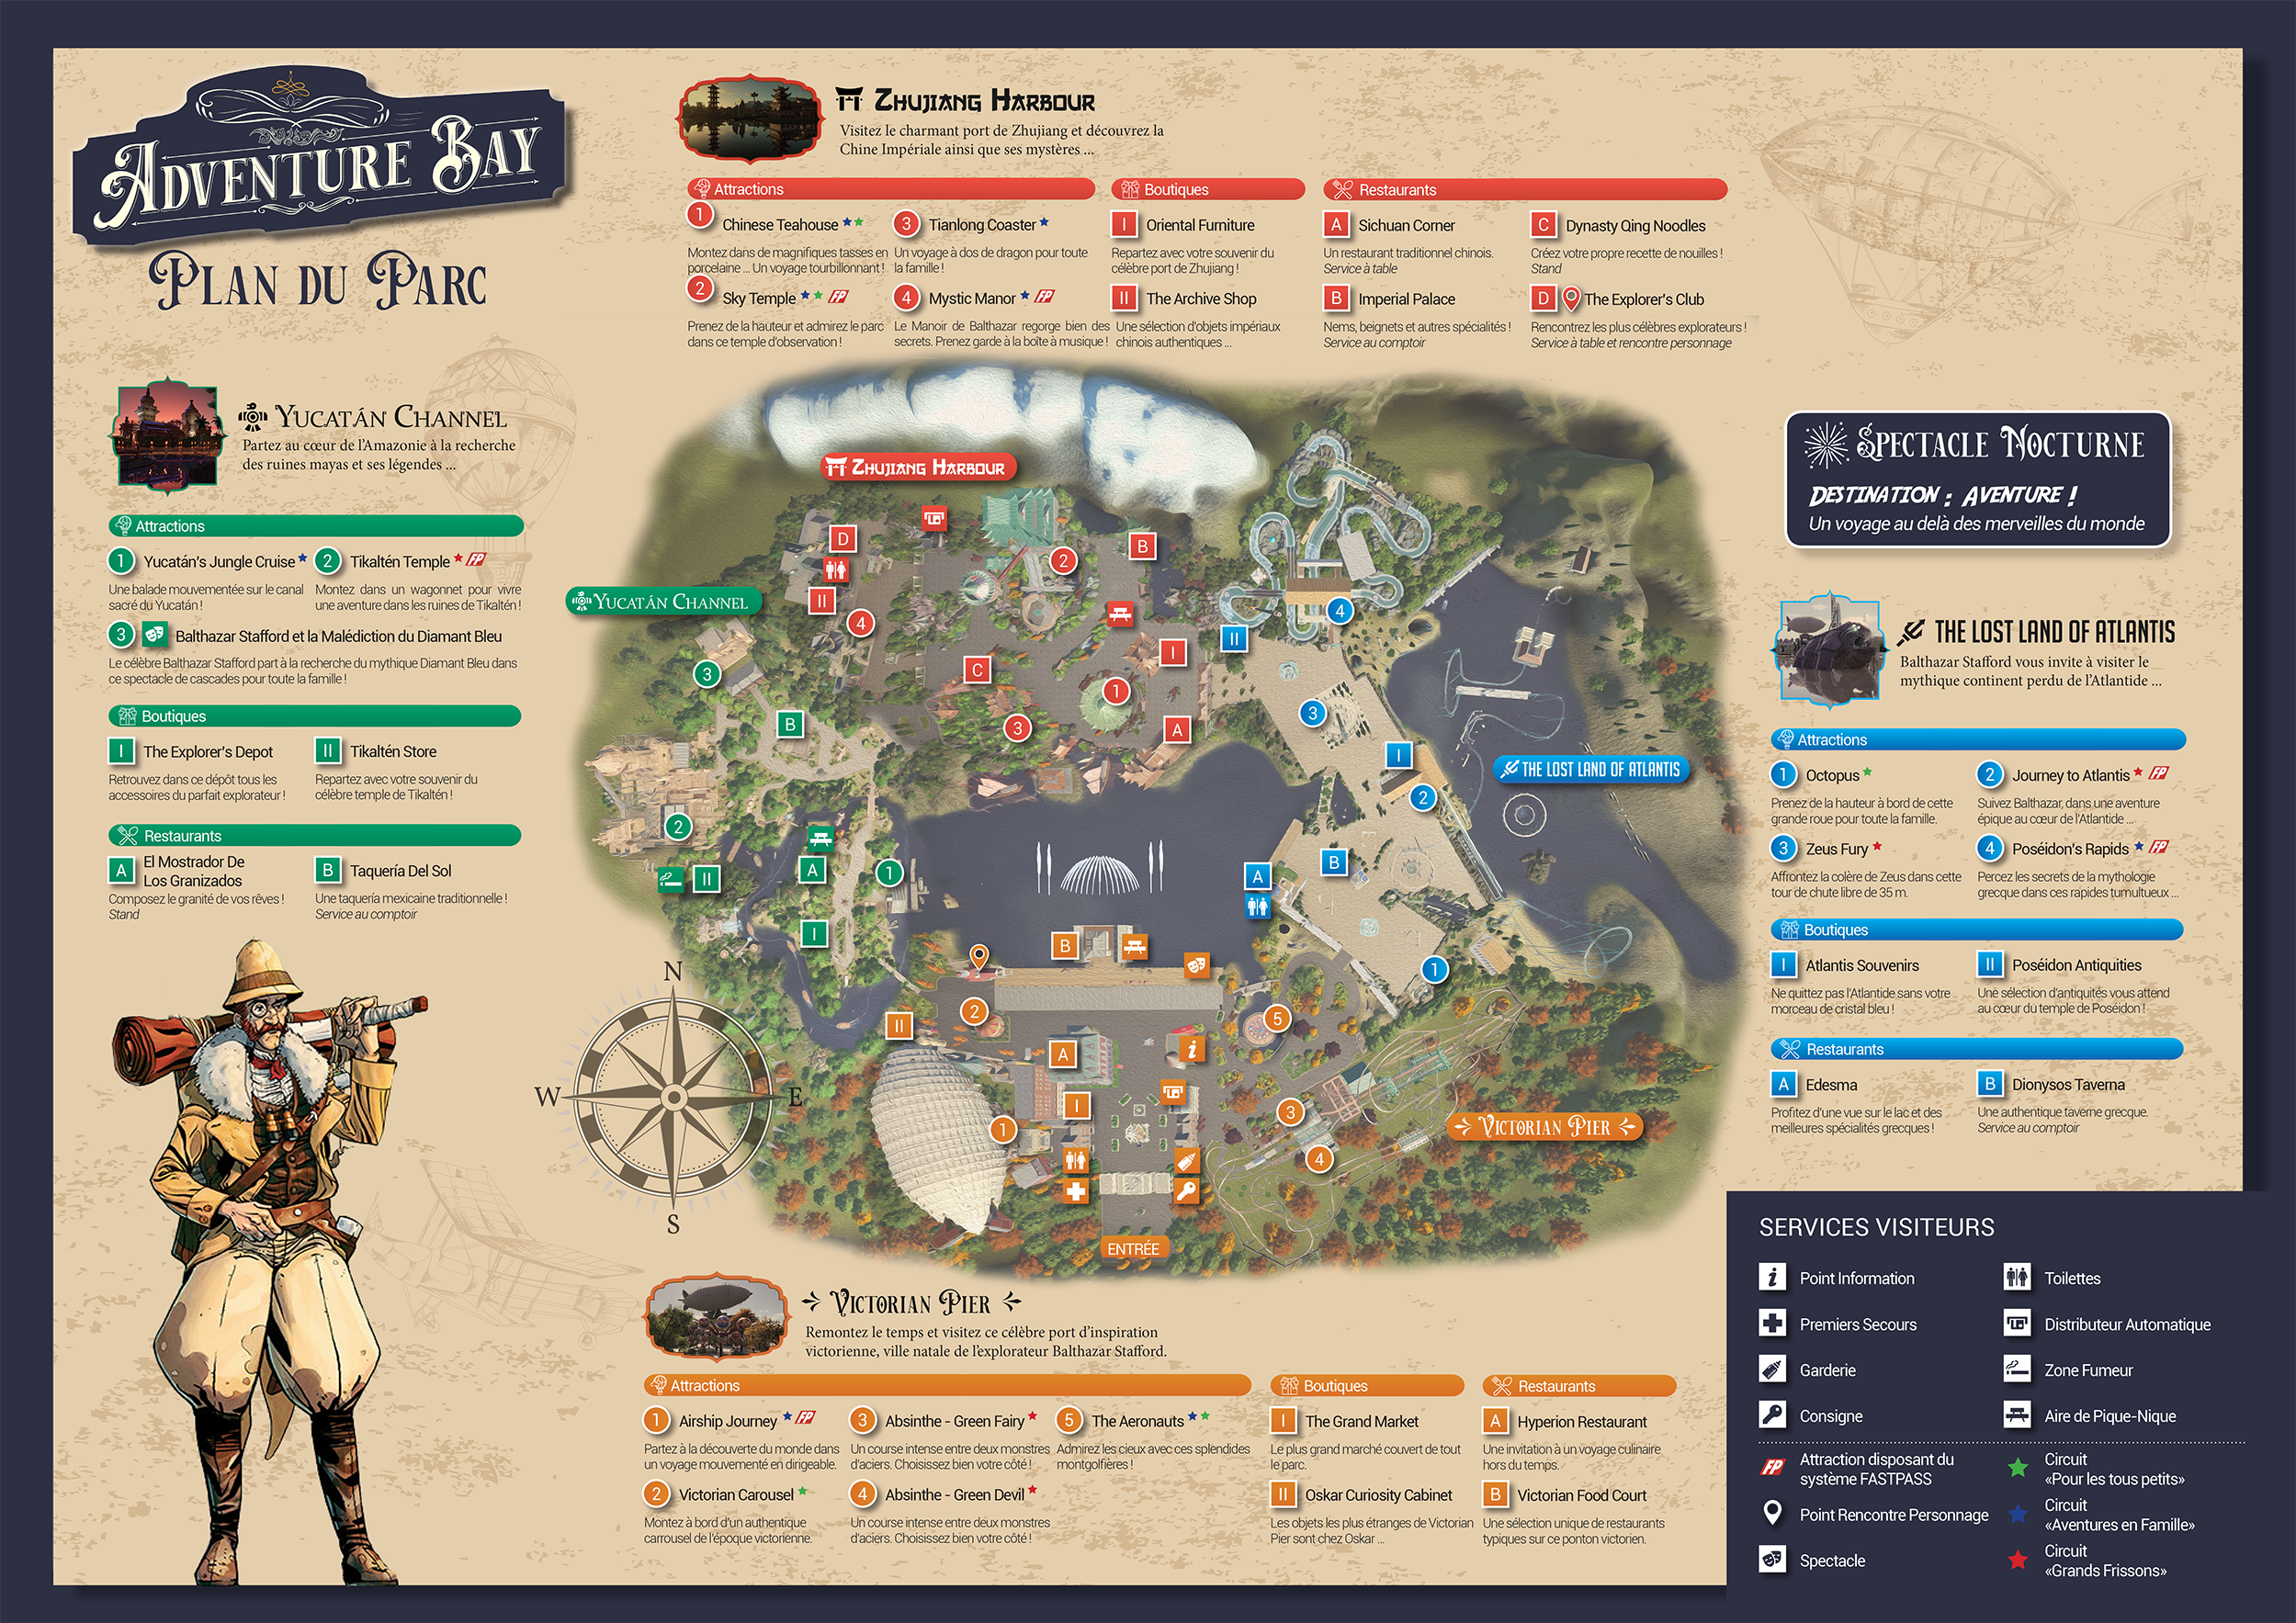 Adventure Bay - Park Map